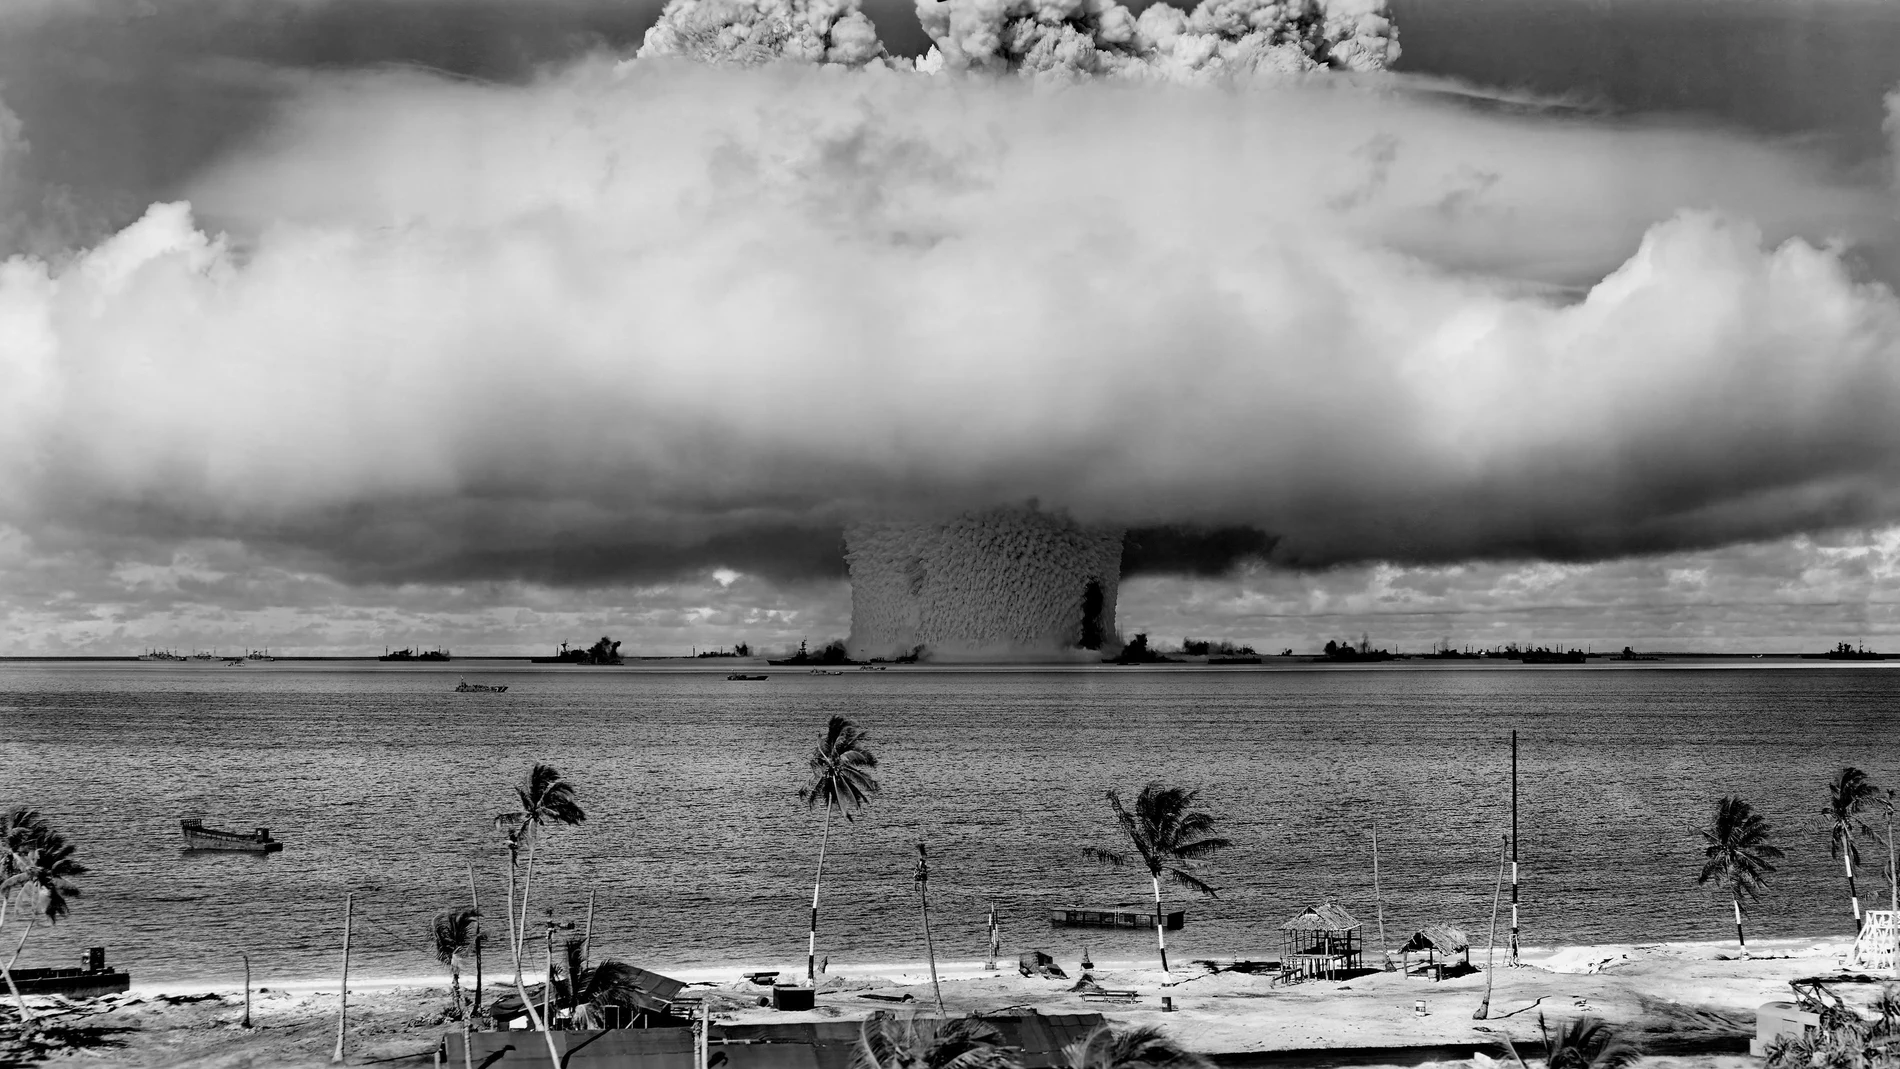 Una imagen del momento en el que explota una bomba nuclear